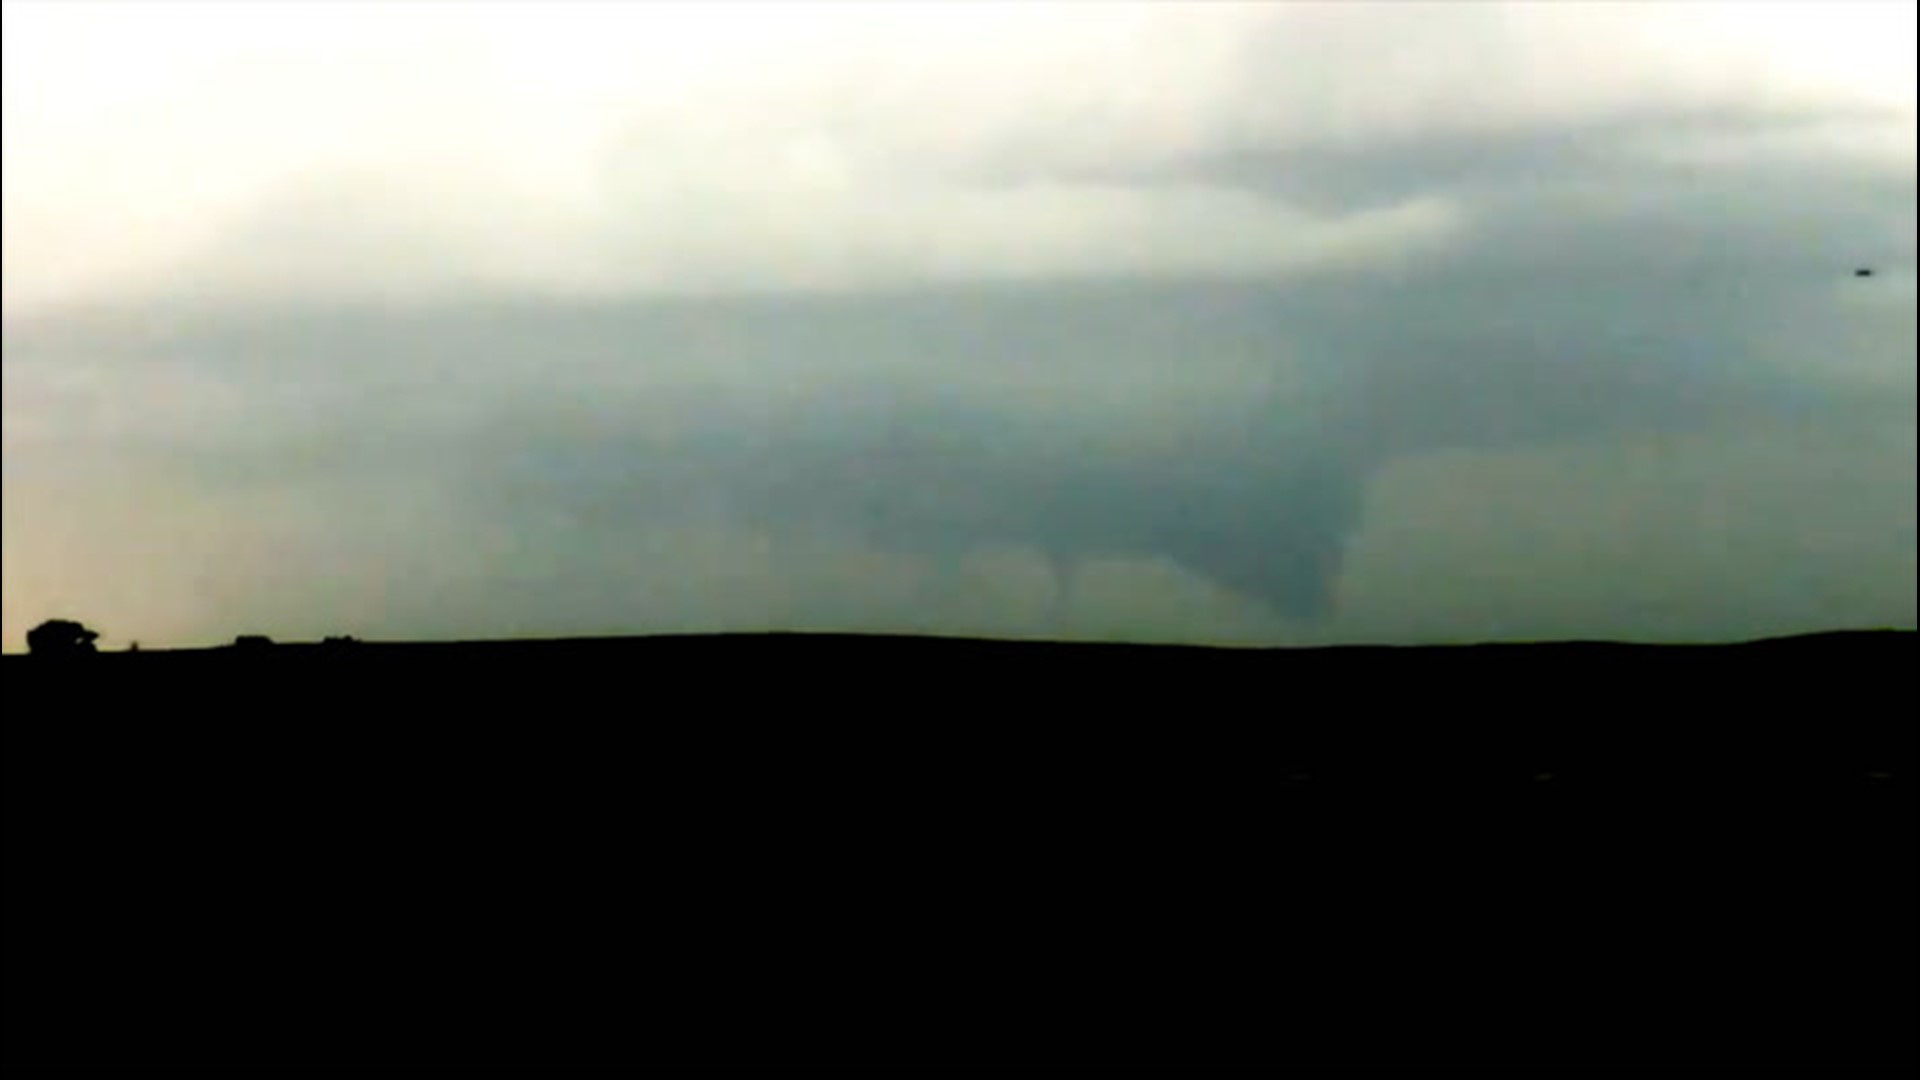 AccuWeather's Blake Naftel spotted a tornado near Aberdeen, North Dakota, on June 7.